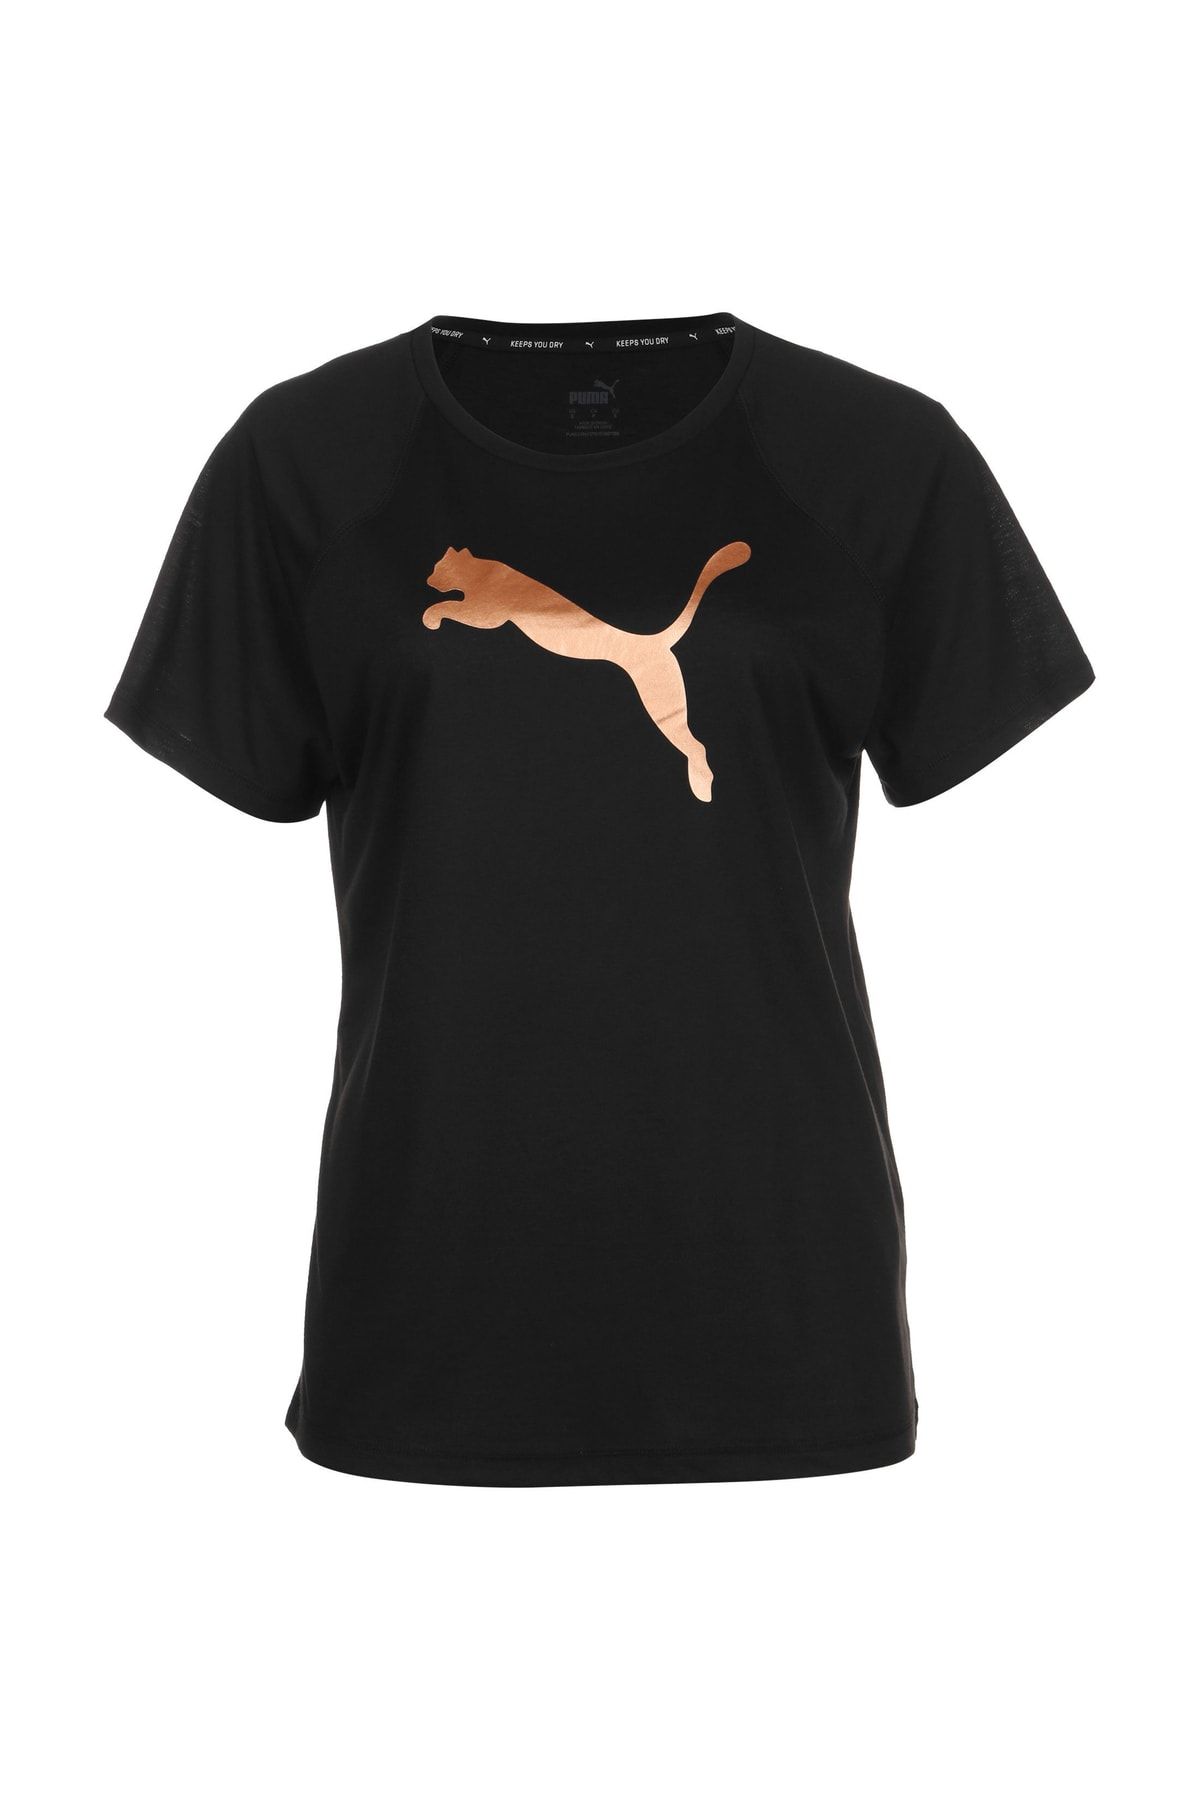 Puma T-Shirt - Black - Regular fit - Trendyol